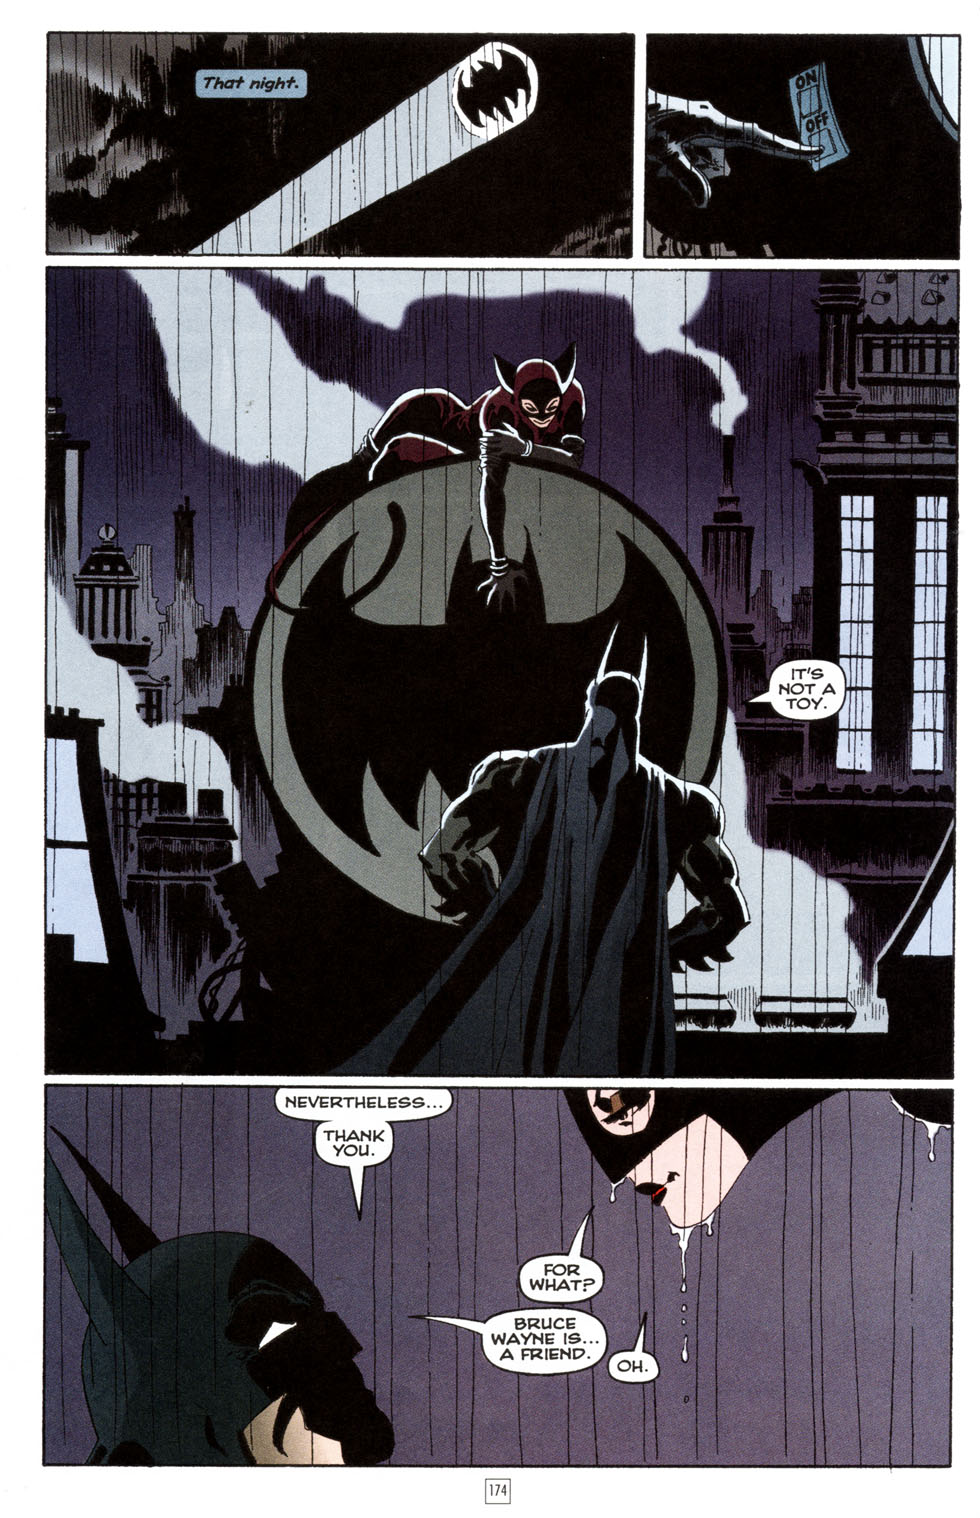 WTF, DC? Batman: The Long Halloween. WTF, DC?